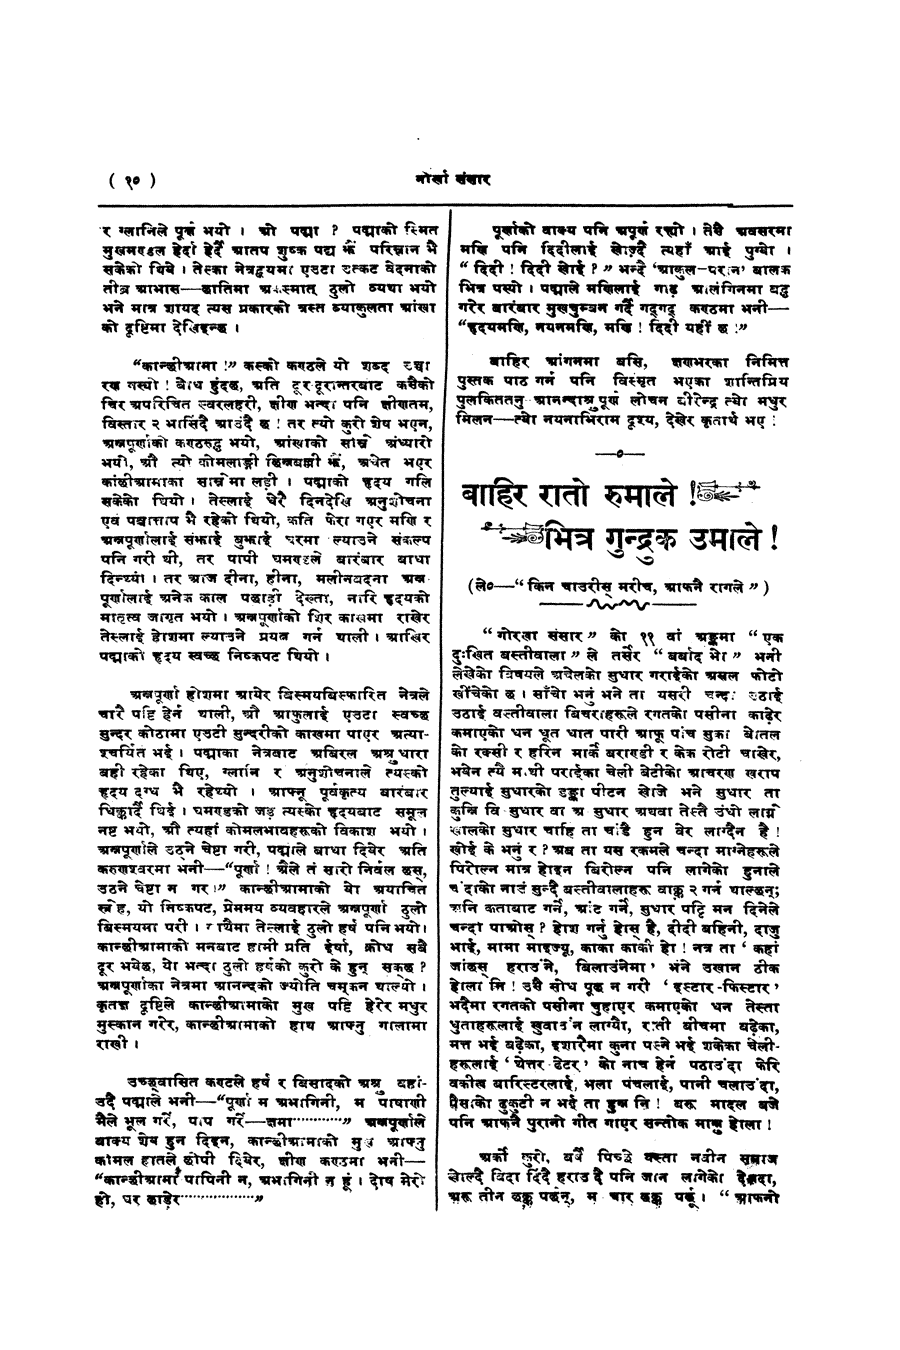 Gorkha Sansar, 1 Mar 1927, page 10